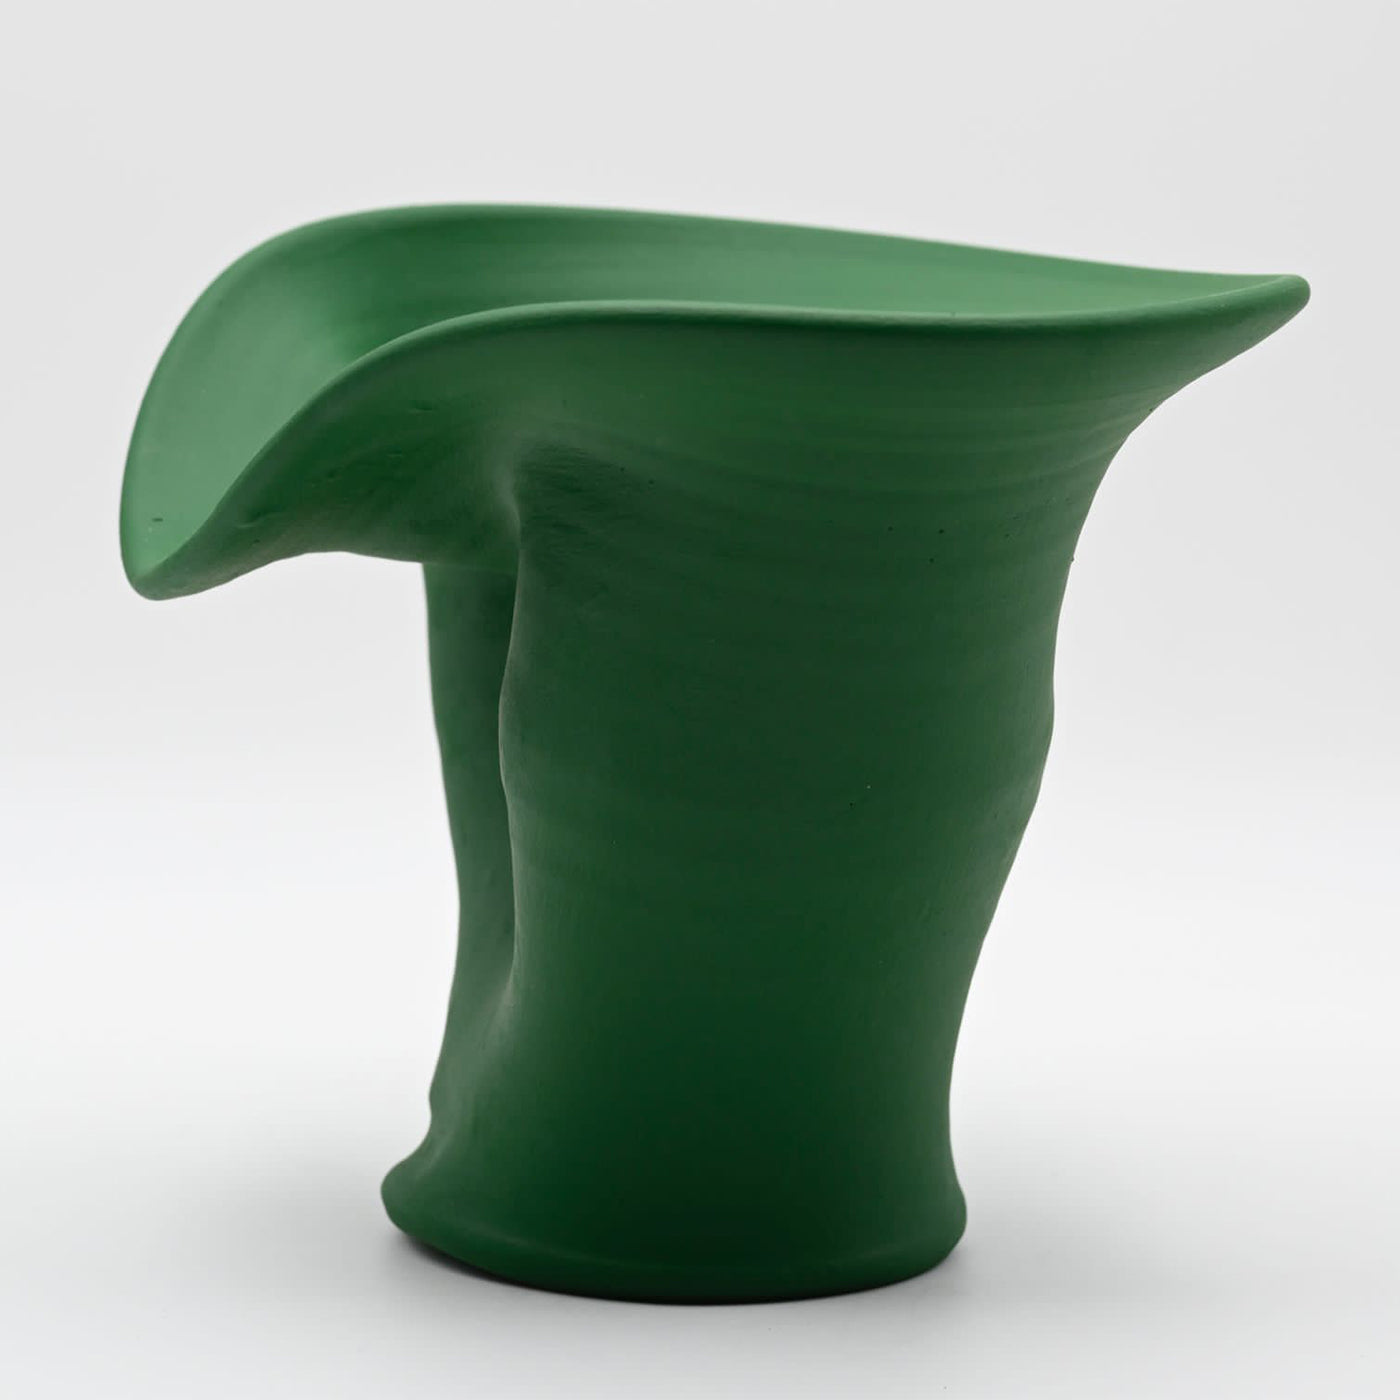 Green Vase #4 - Alternative view 1